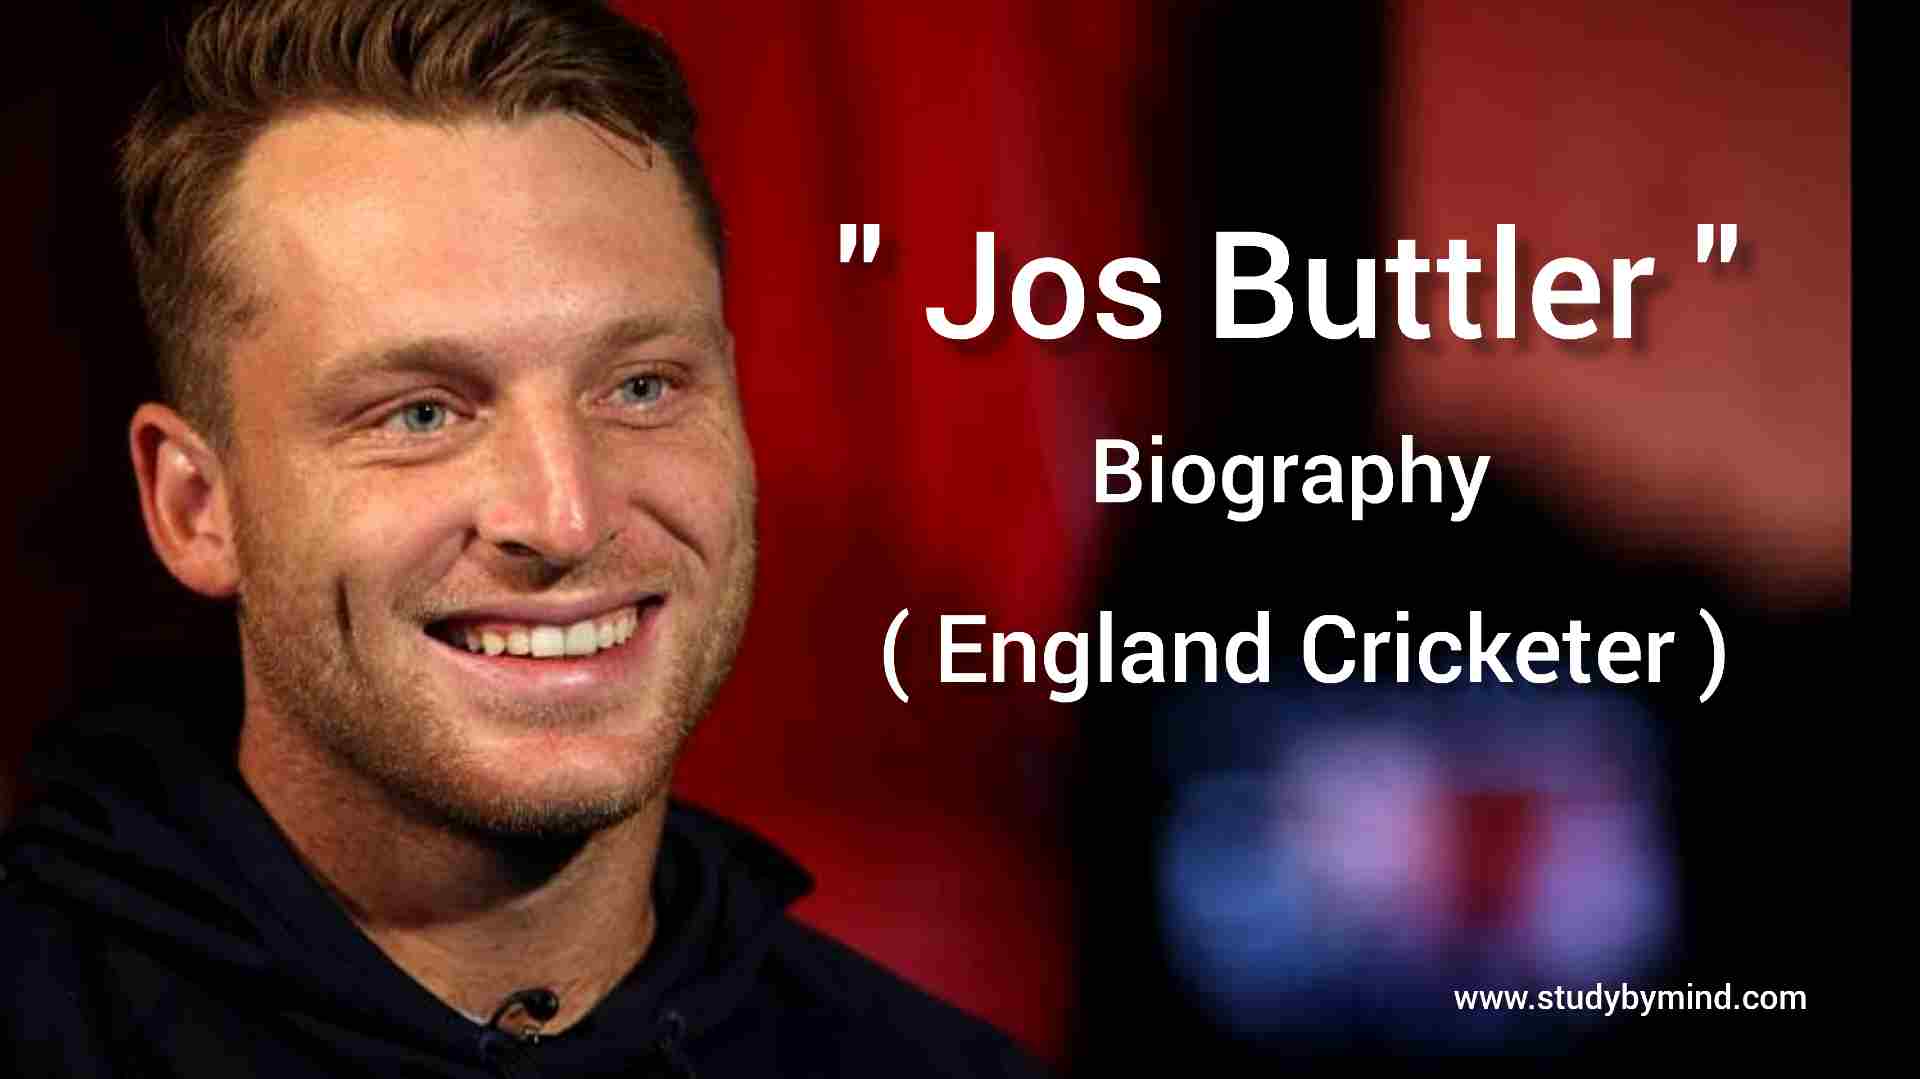 Jos Buttler Biography - Cricketer